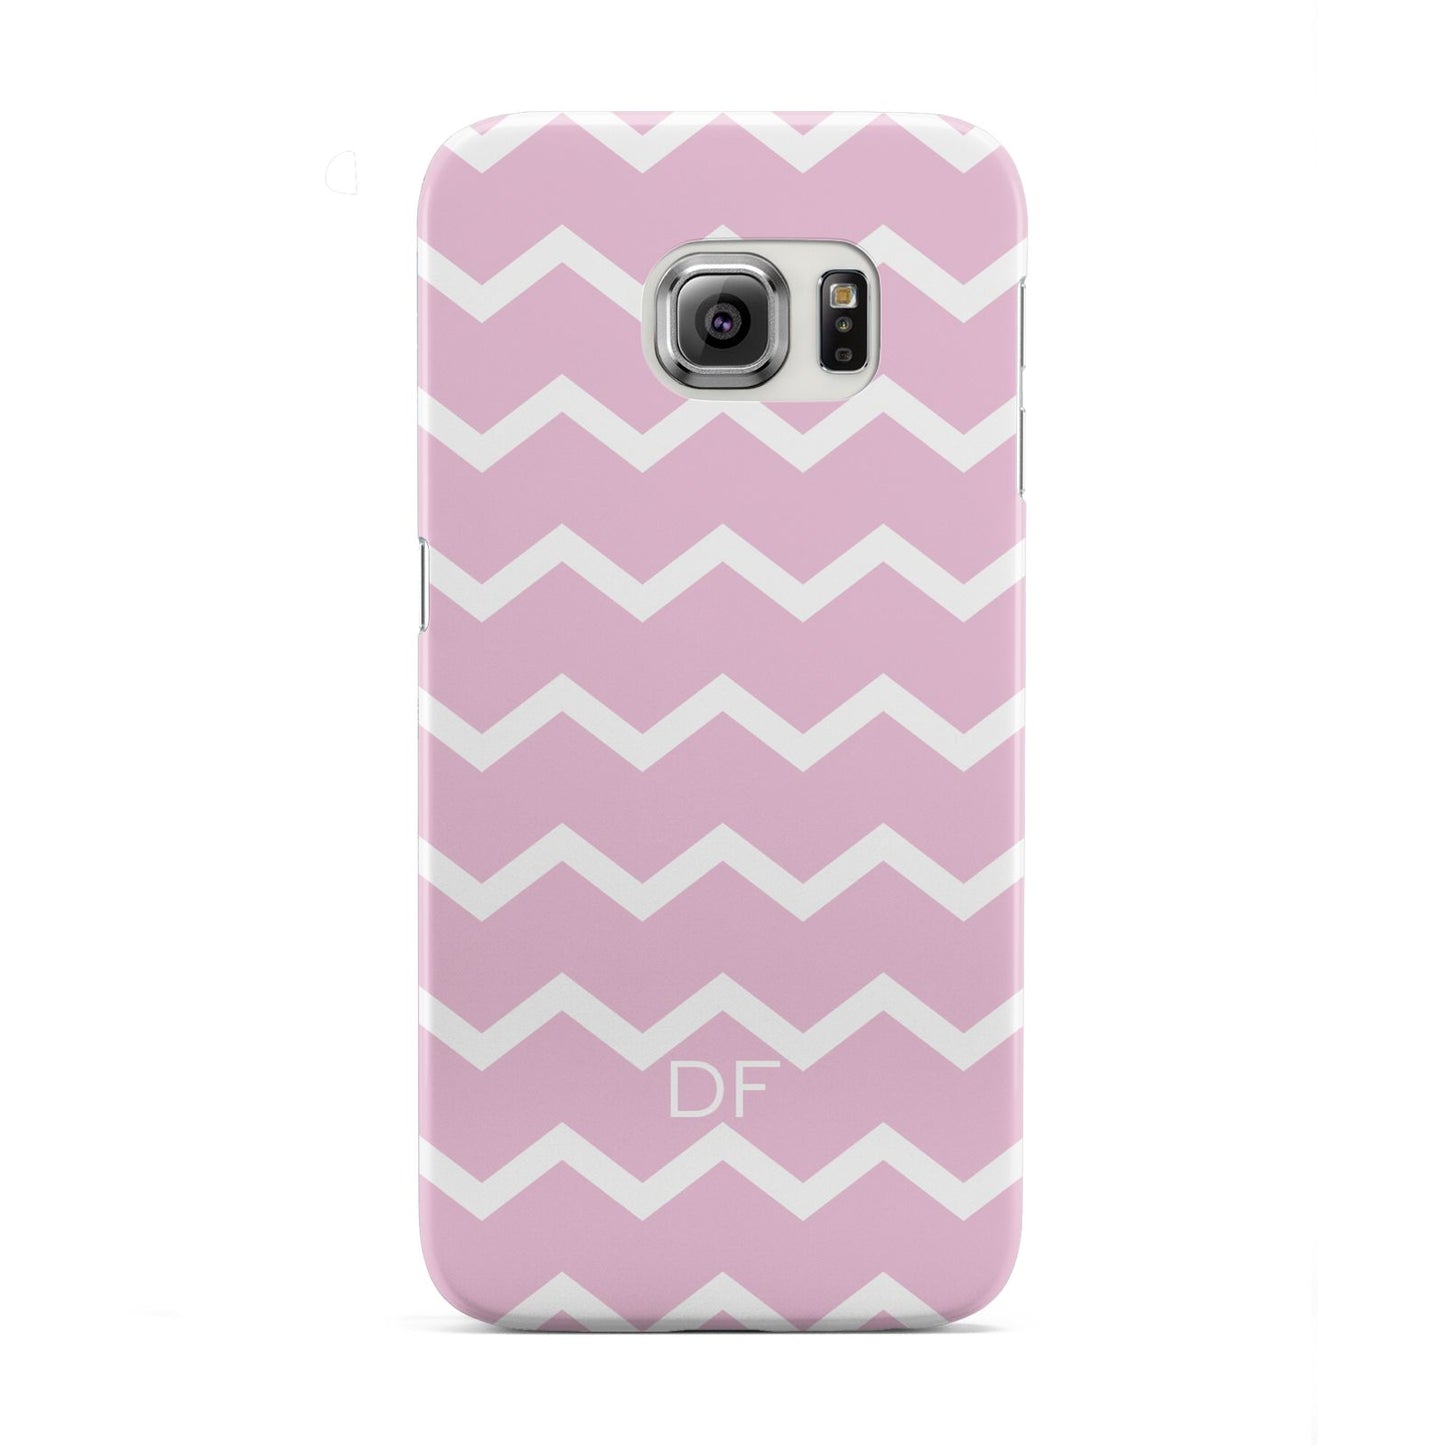 Personalised Chevron Pink Samsung Galaxy S6 Edge Case